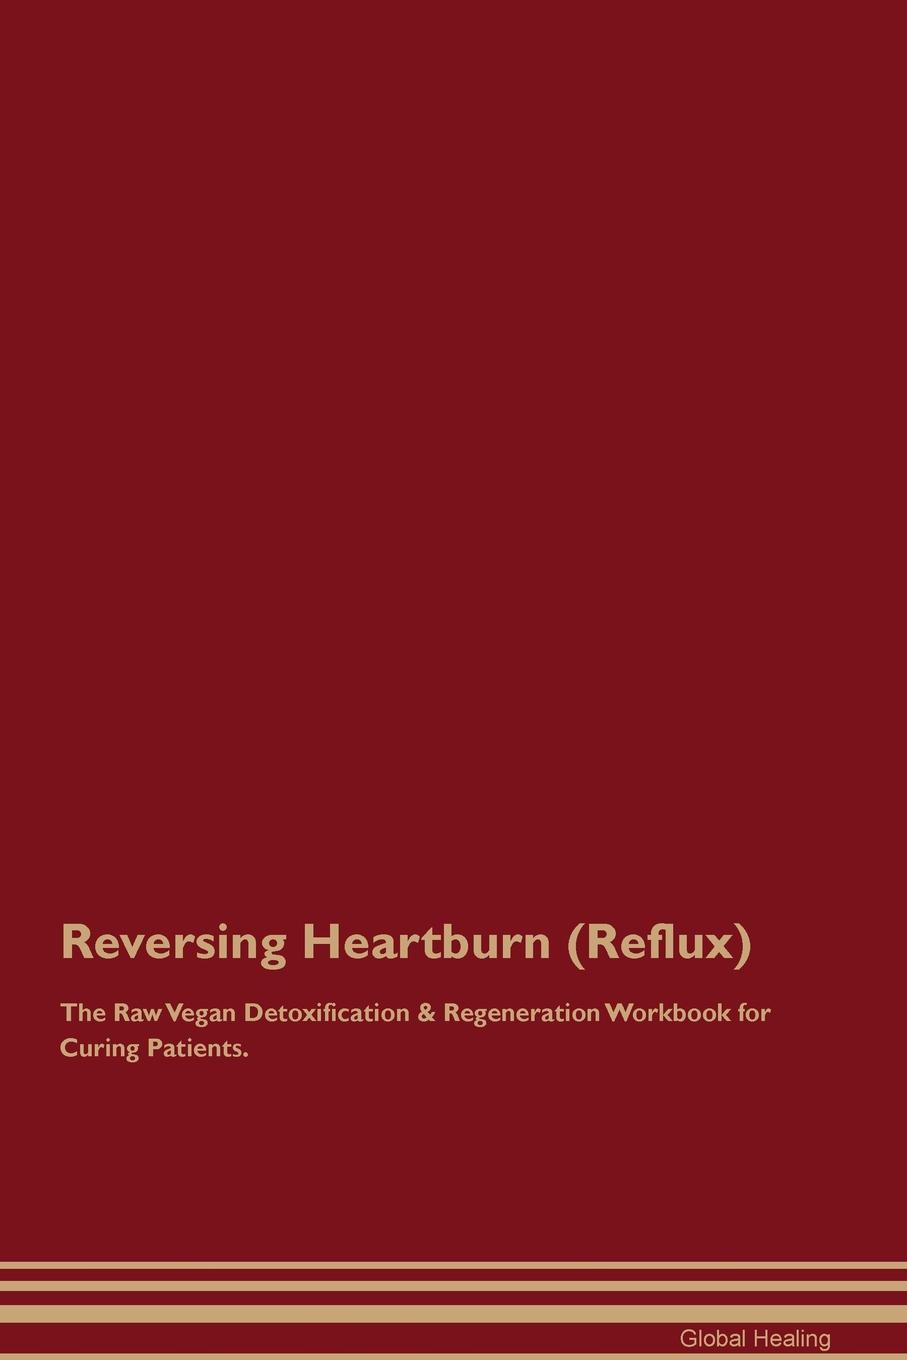 Reversing Heartburn (Reflux) The Raw Vegan Detoxification & Regeneration Workbook for Curing Patients